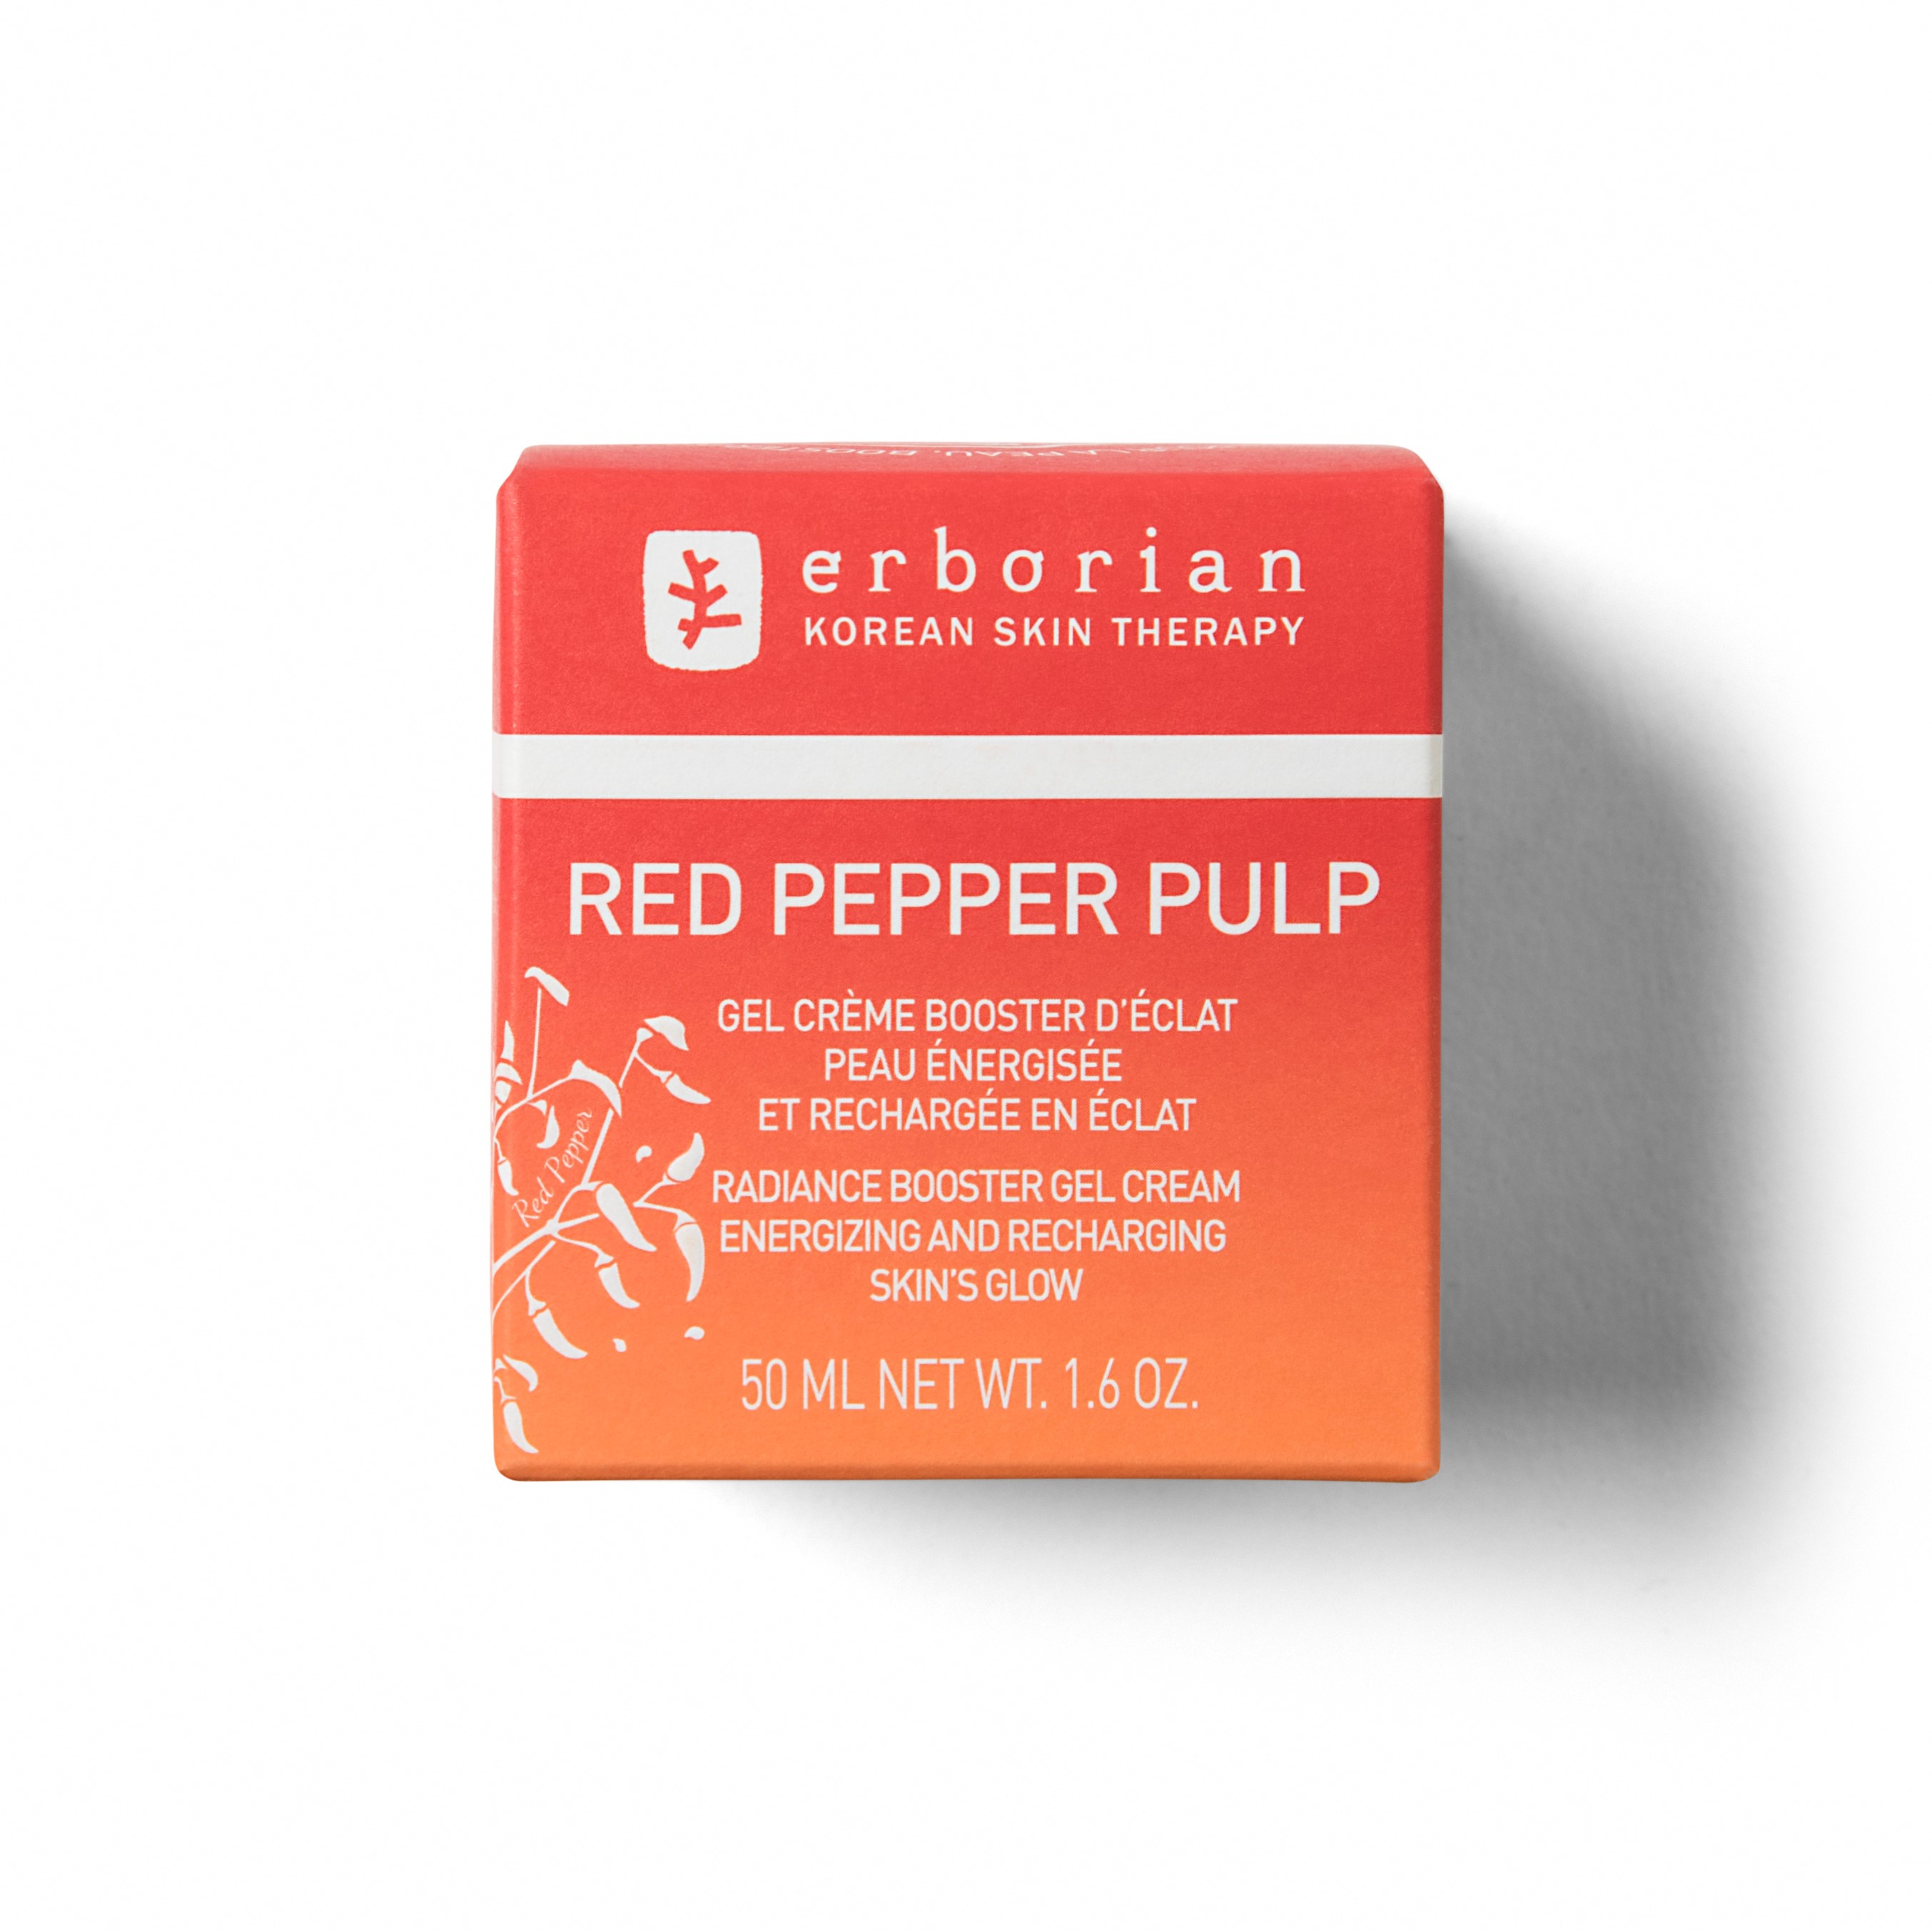 Erborian Red Pepper Pulp | Space NK